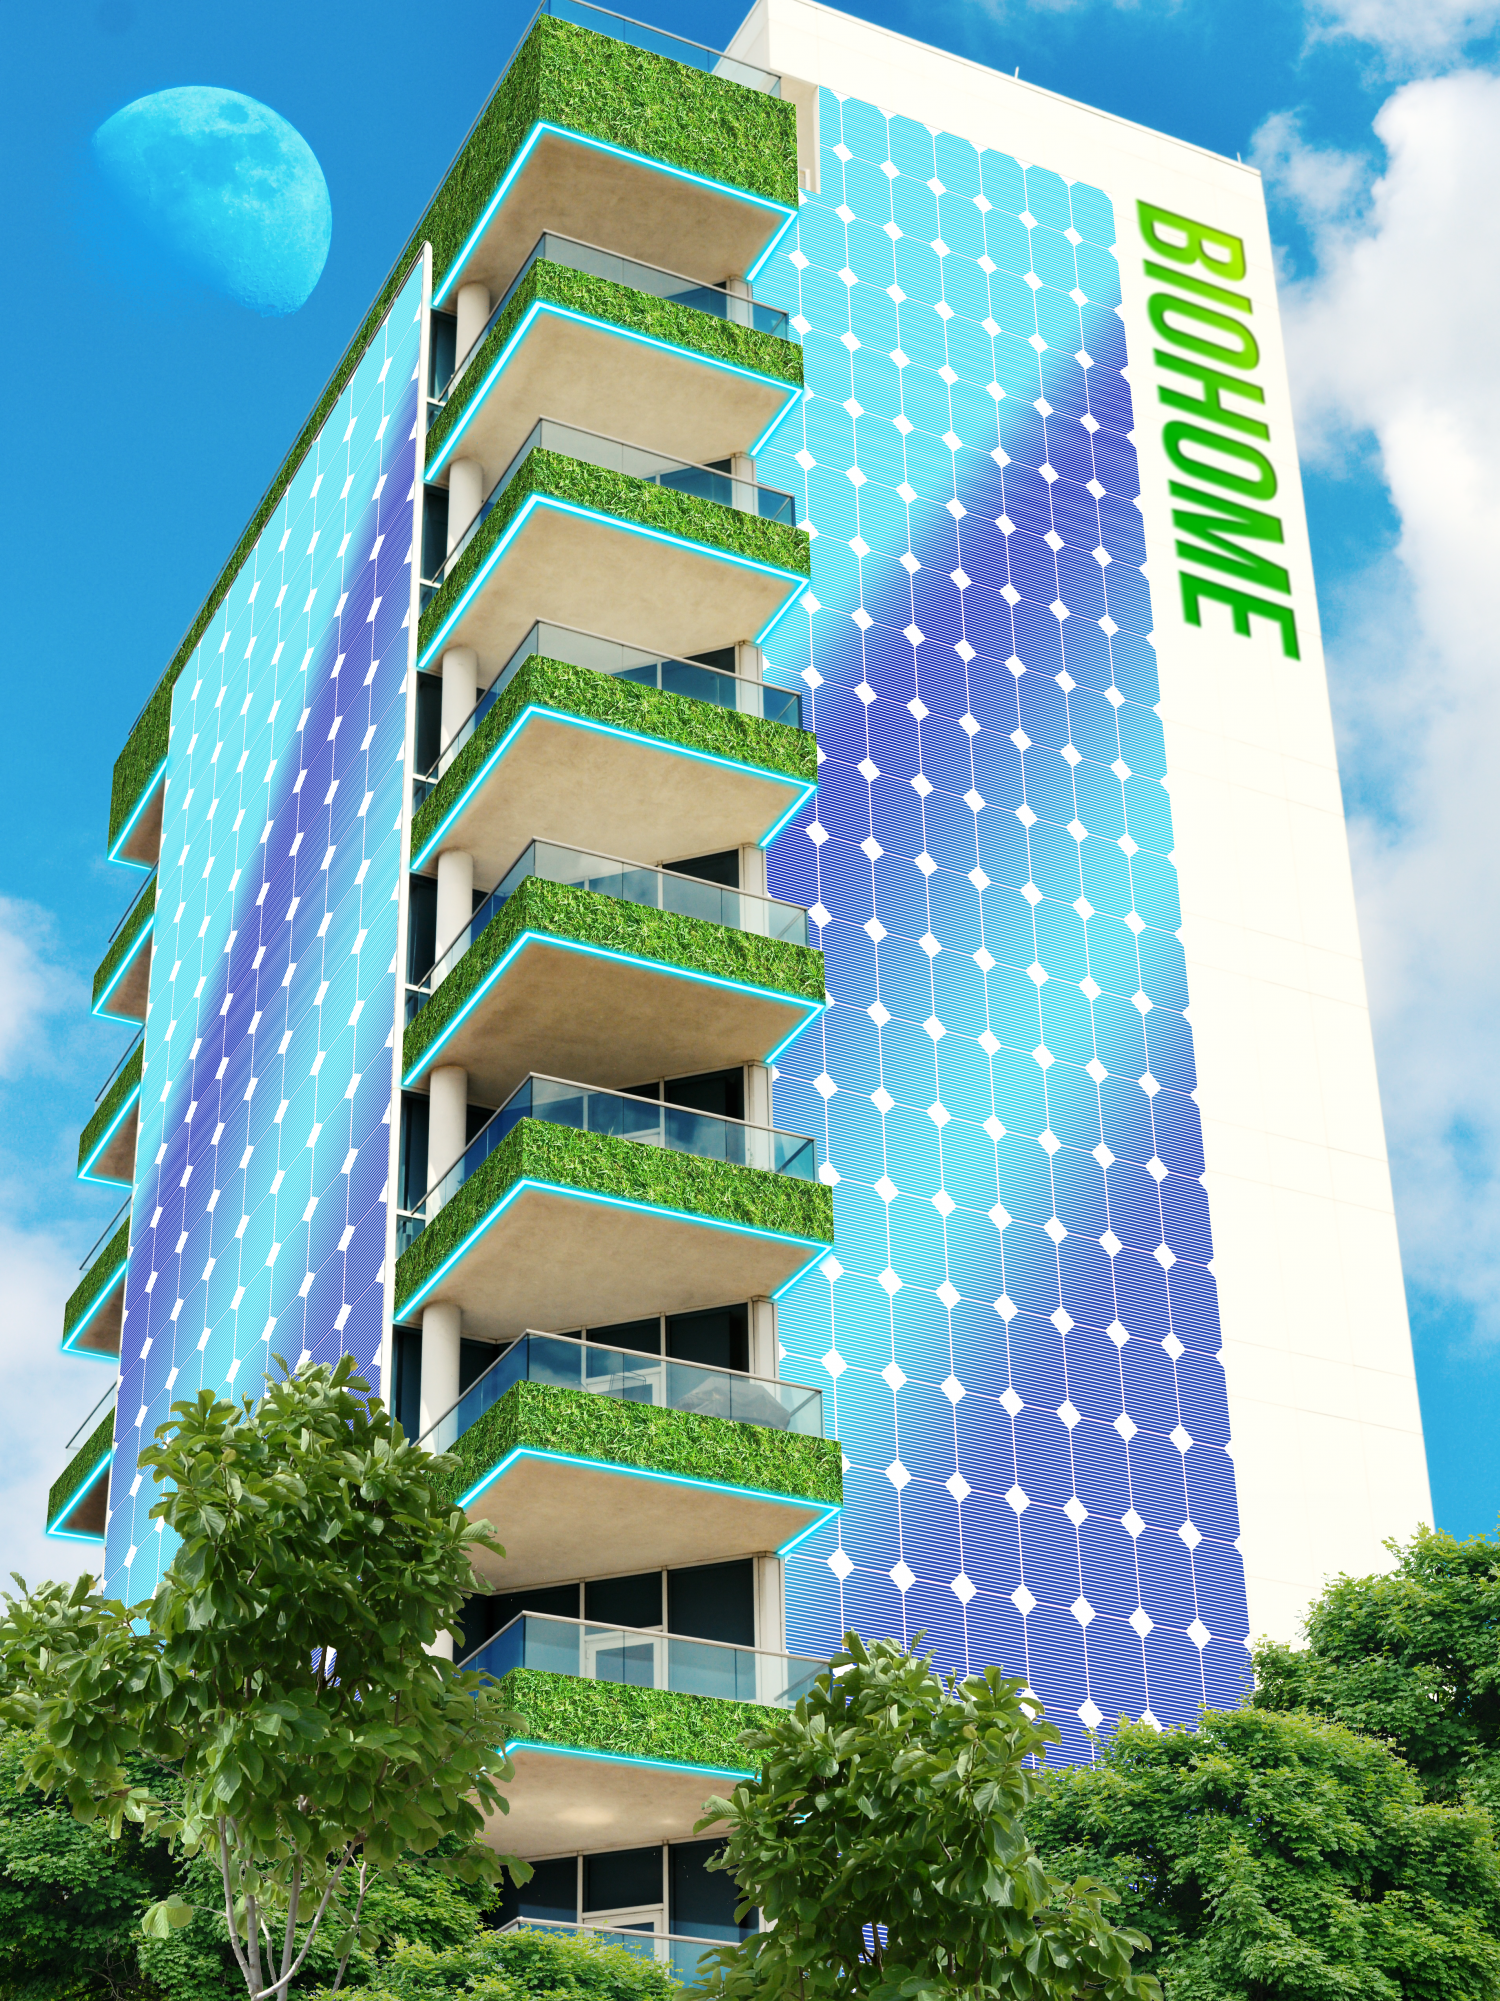 Eco hotel of the future